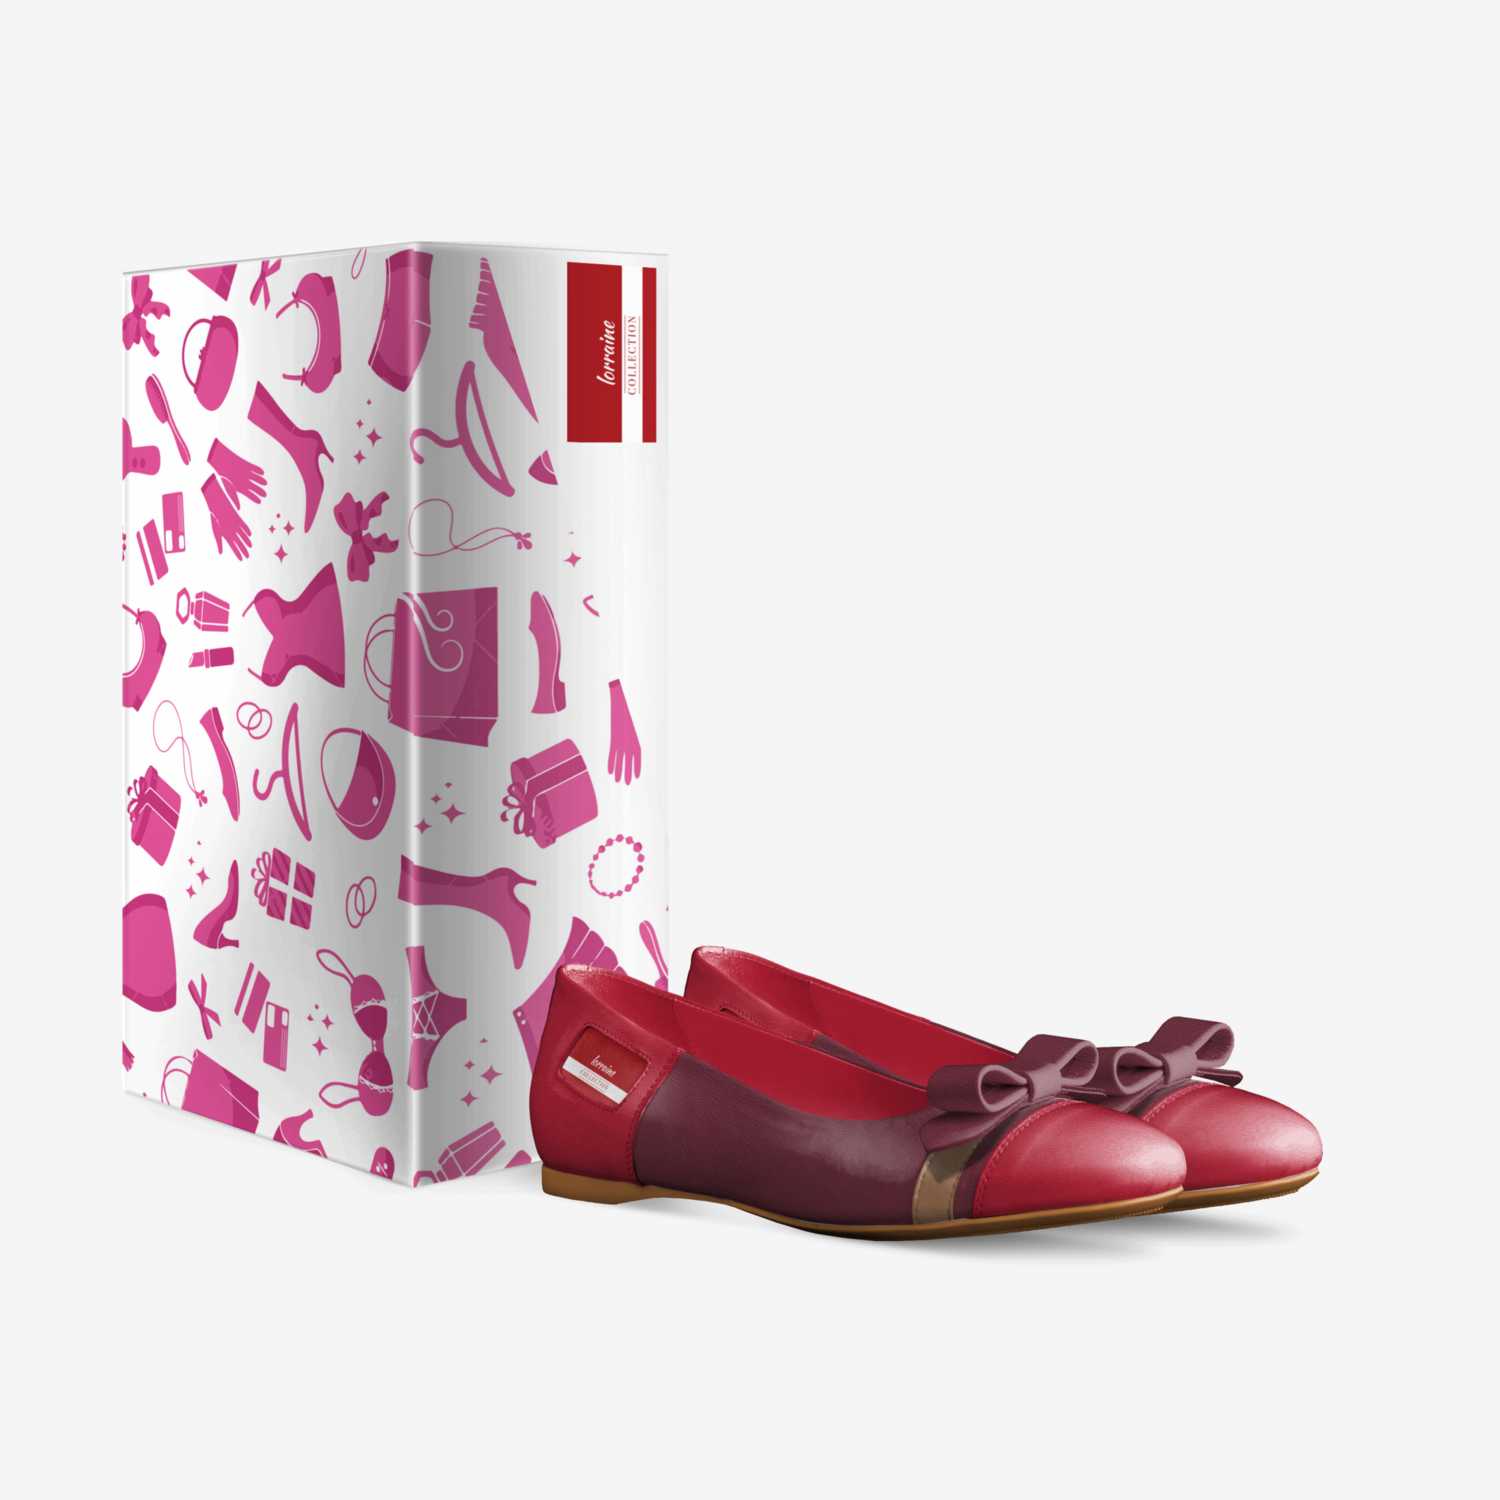 lorraine custom made in Italy shoes by Joyce Hugo | Box view